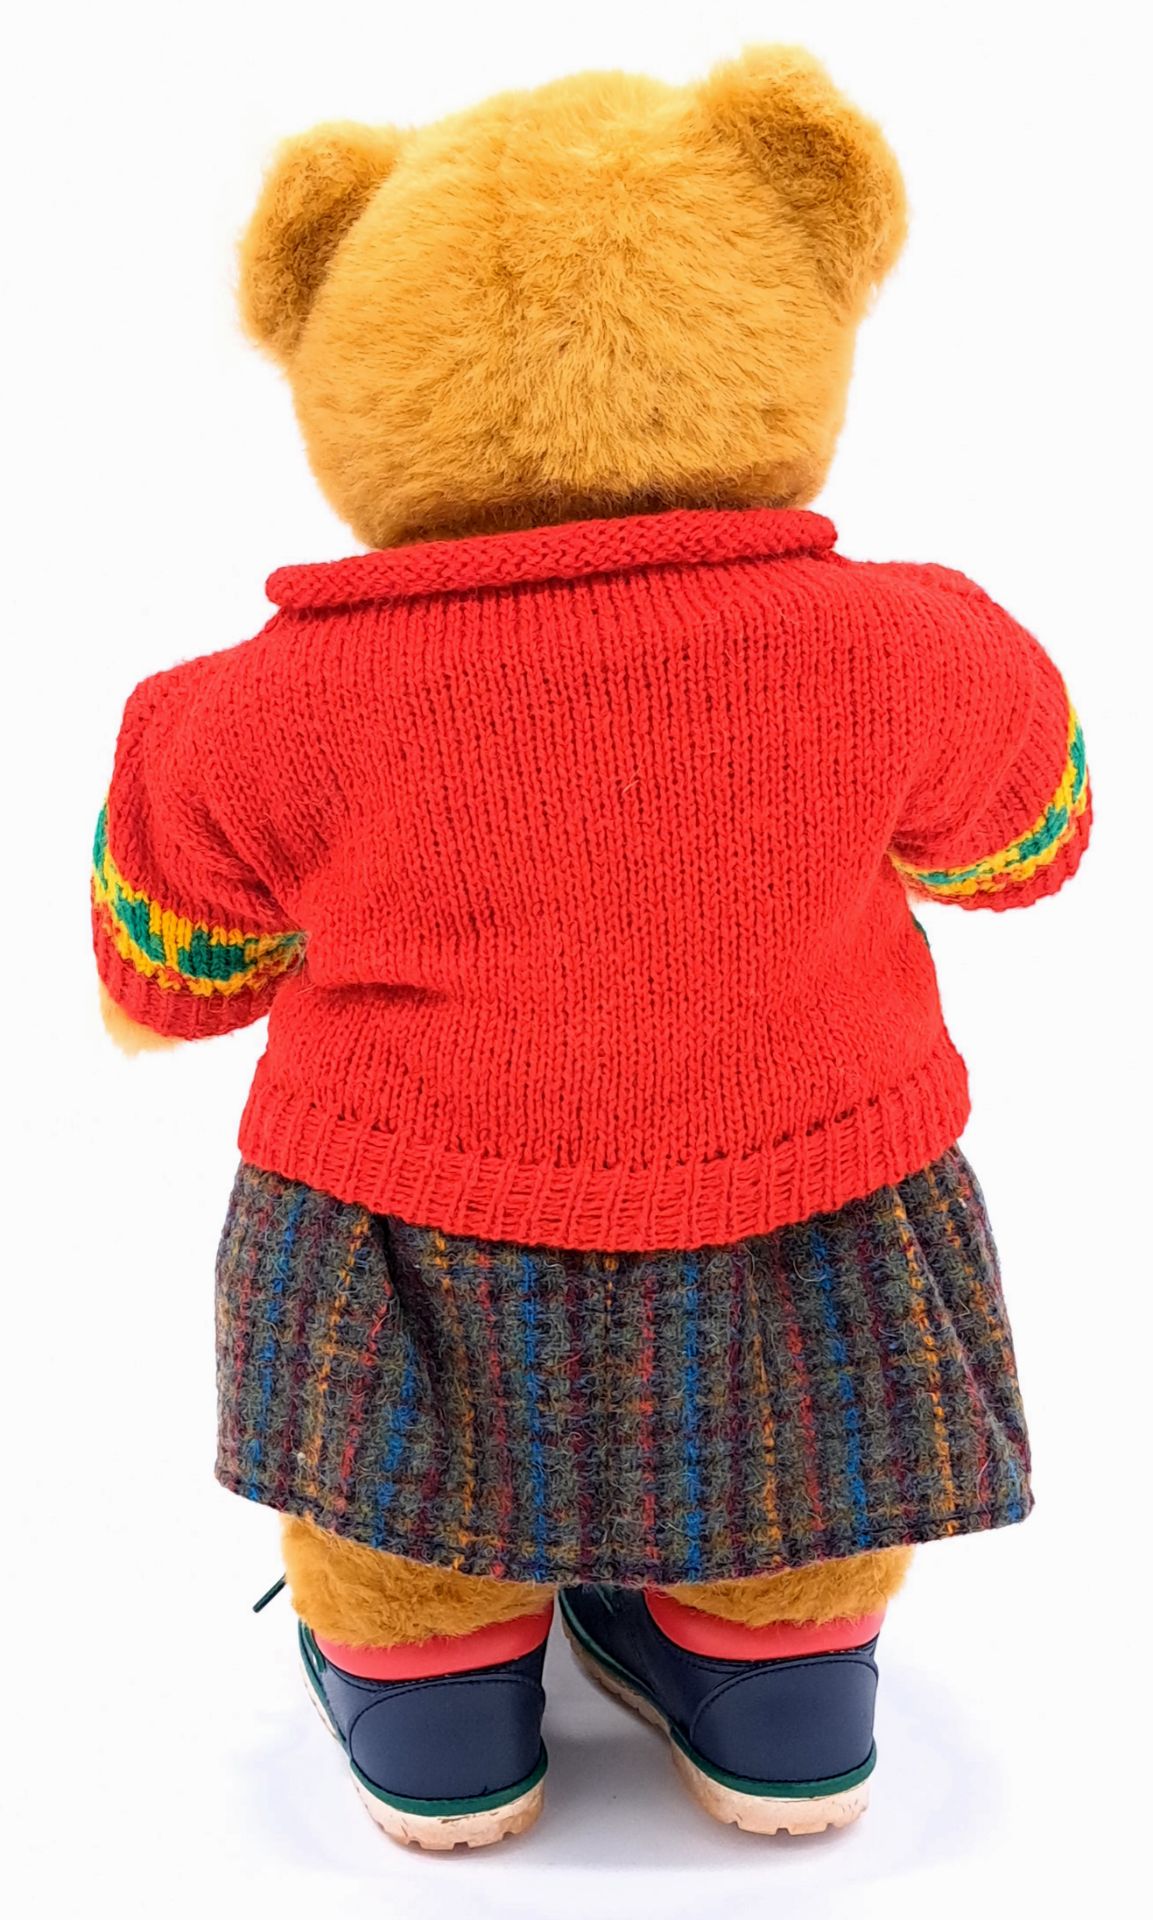 Little Folk Lakeland Bears (UK) vintage teddy bear - Image 2 of 2